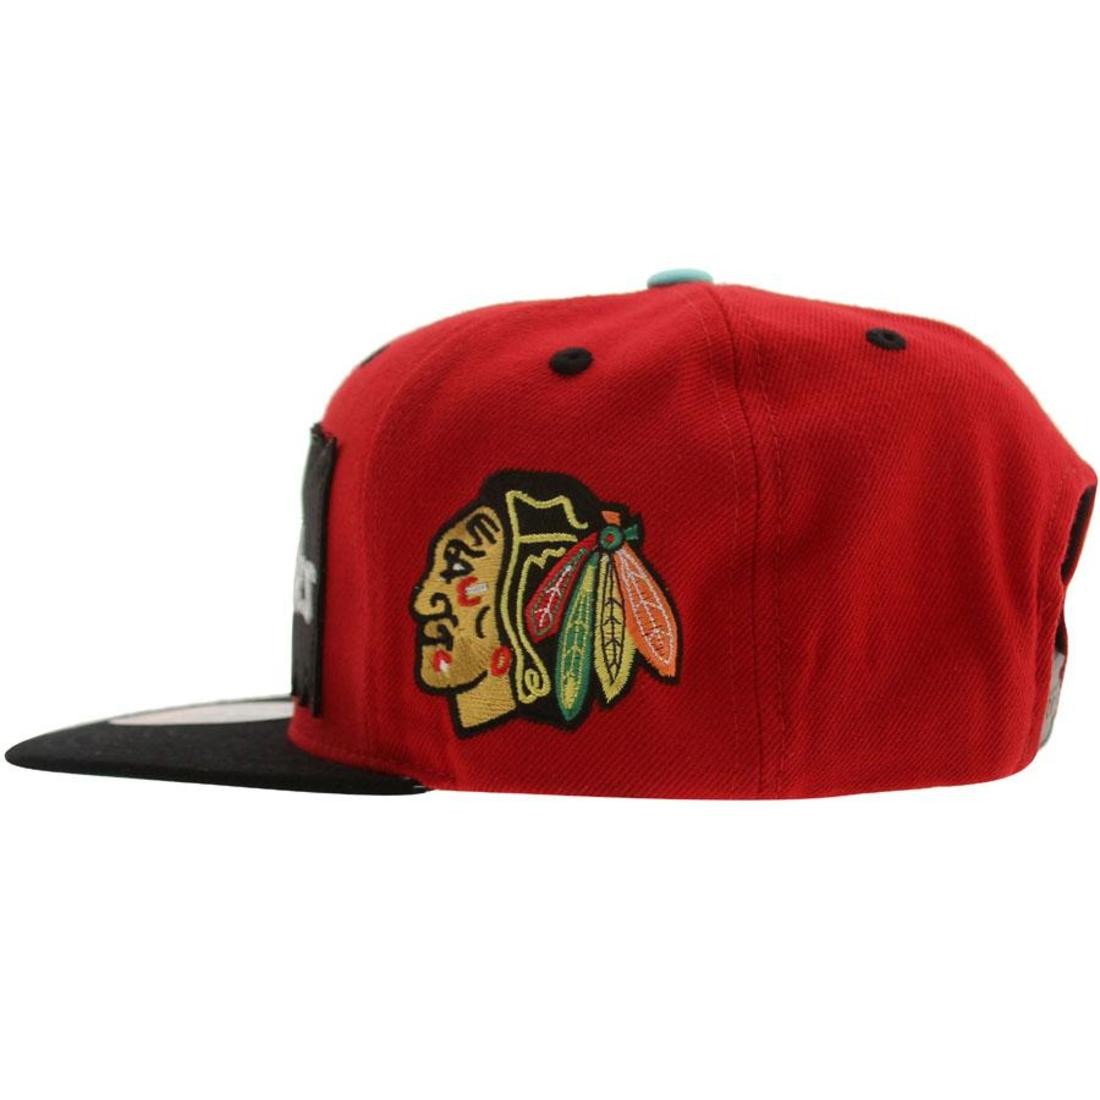 Youth Cream/Red Chicago Blackhawks Deadstock Snapback Hat